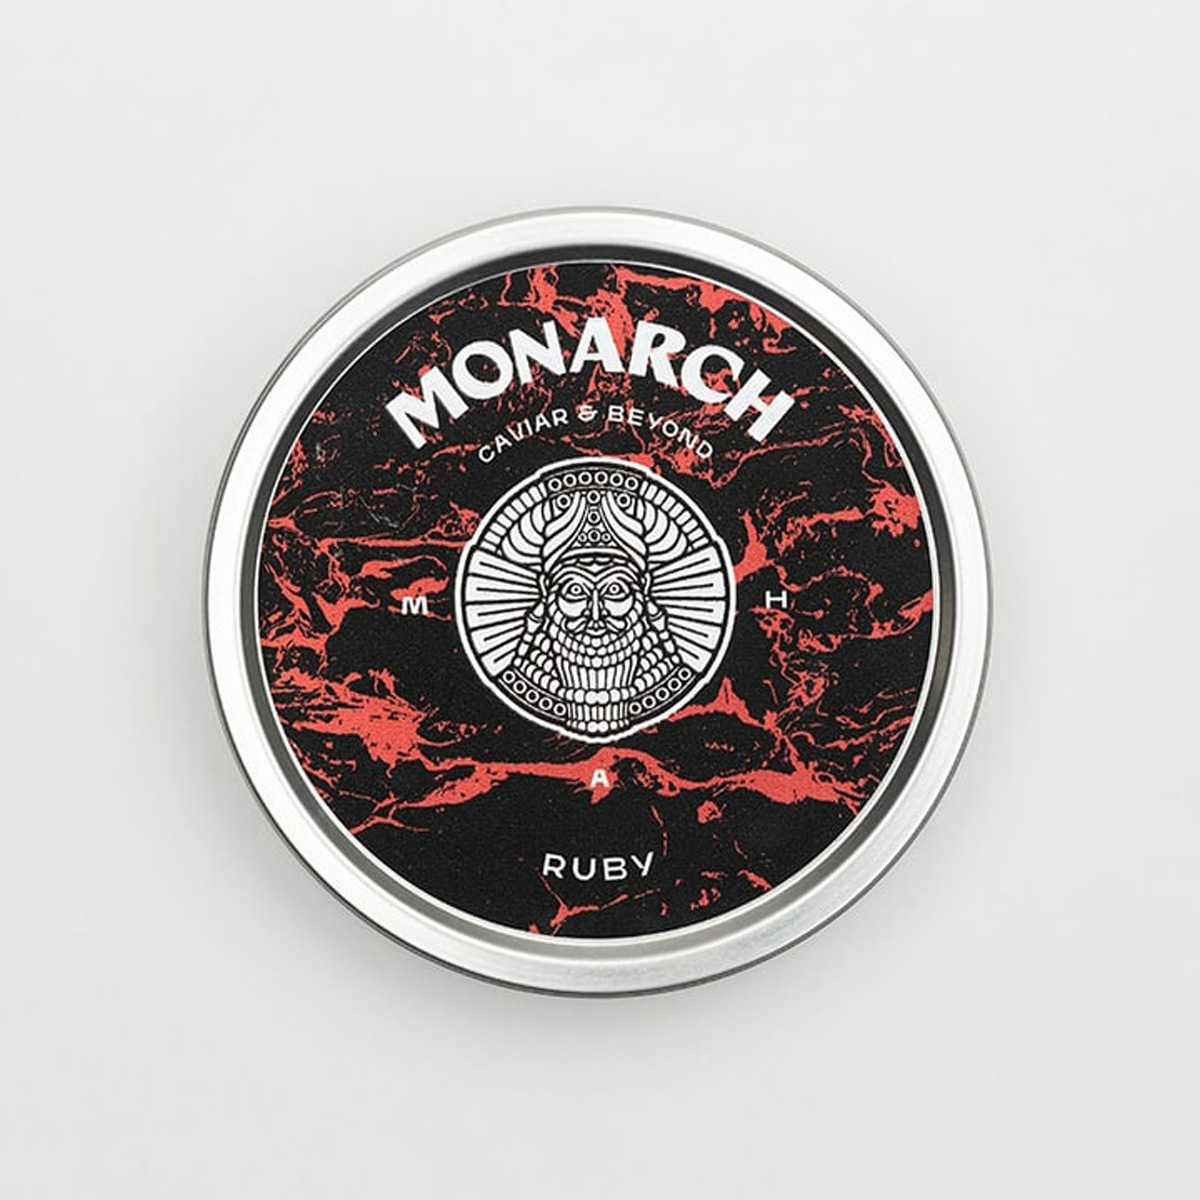 Monarch - Ruby Caviar